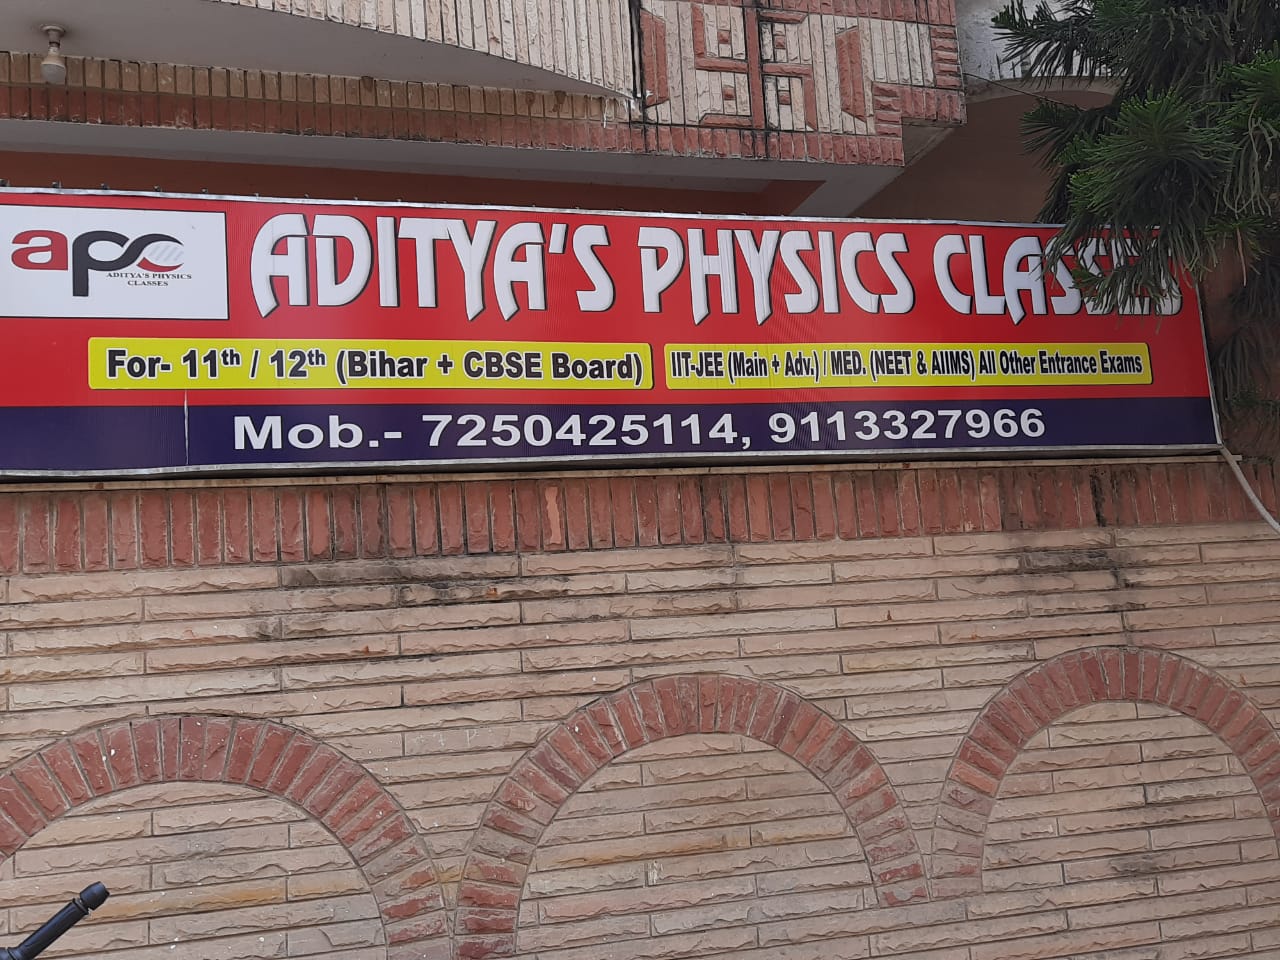      | Aditya Physics | adityaphysics.in